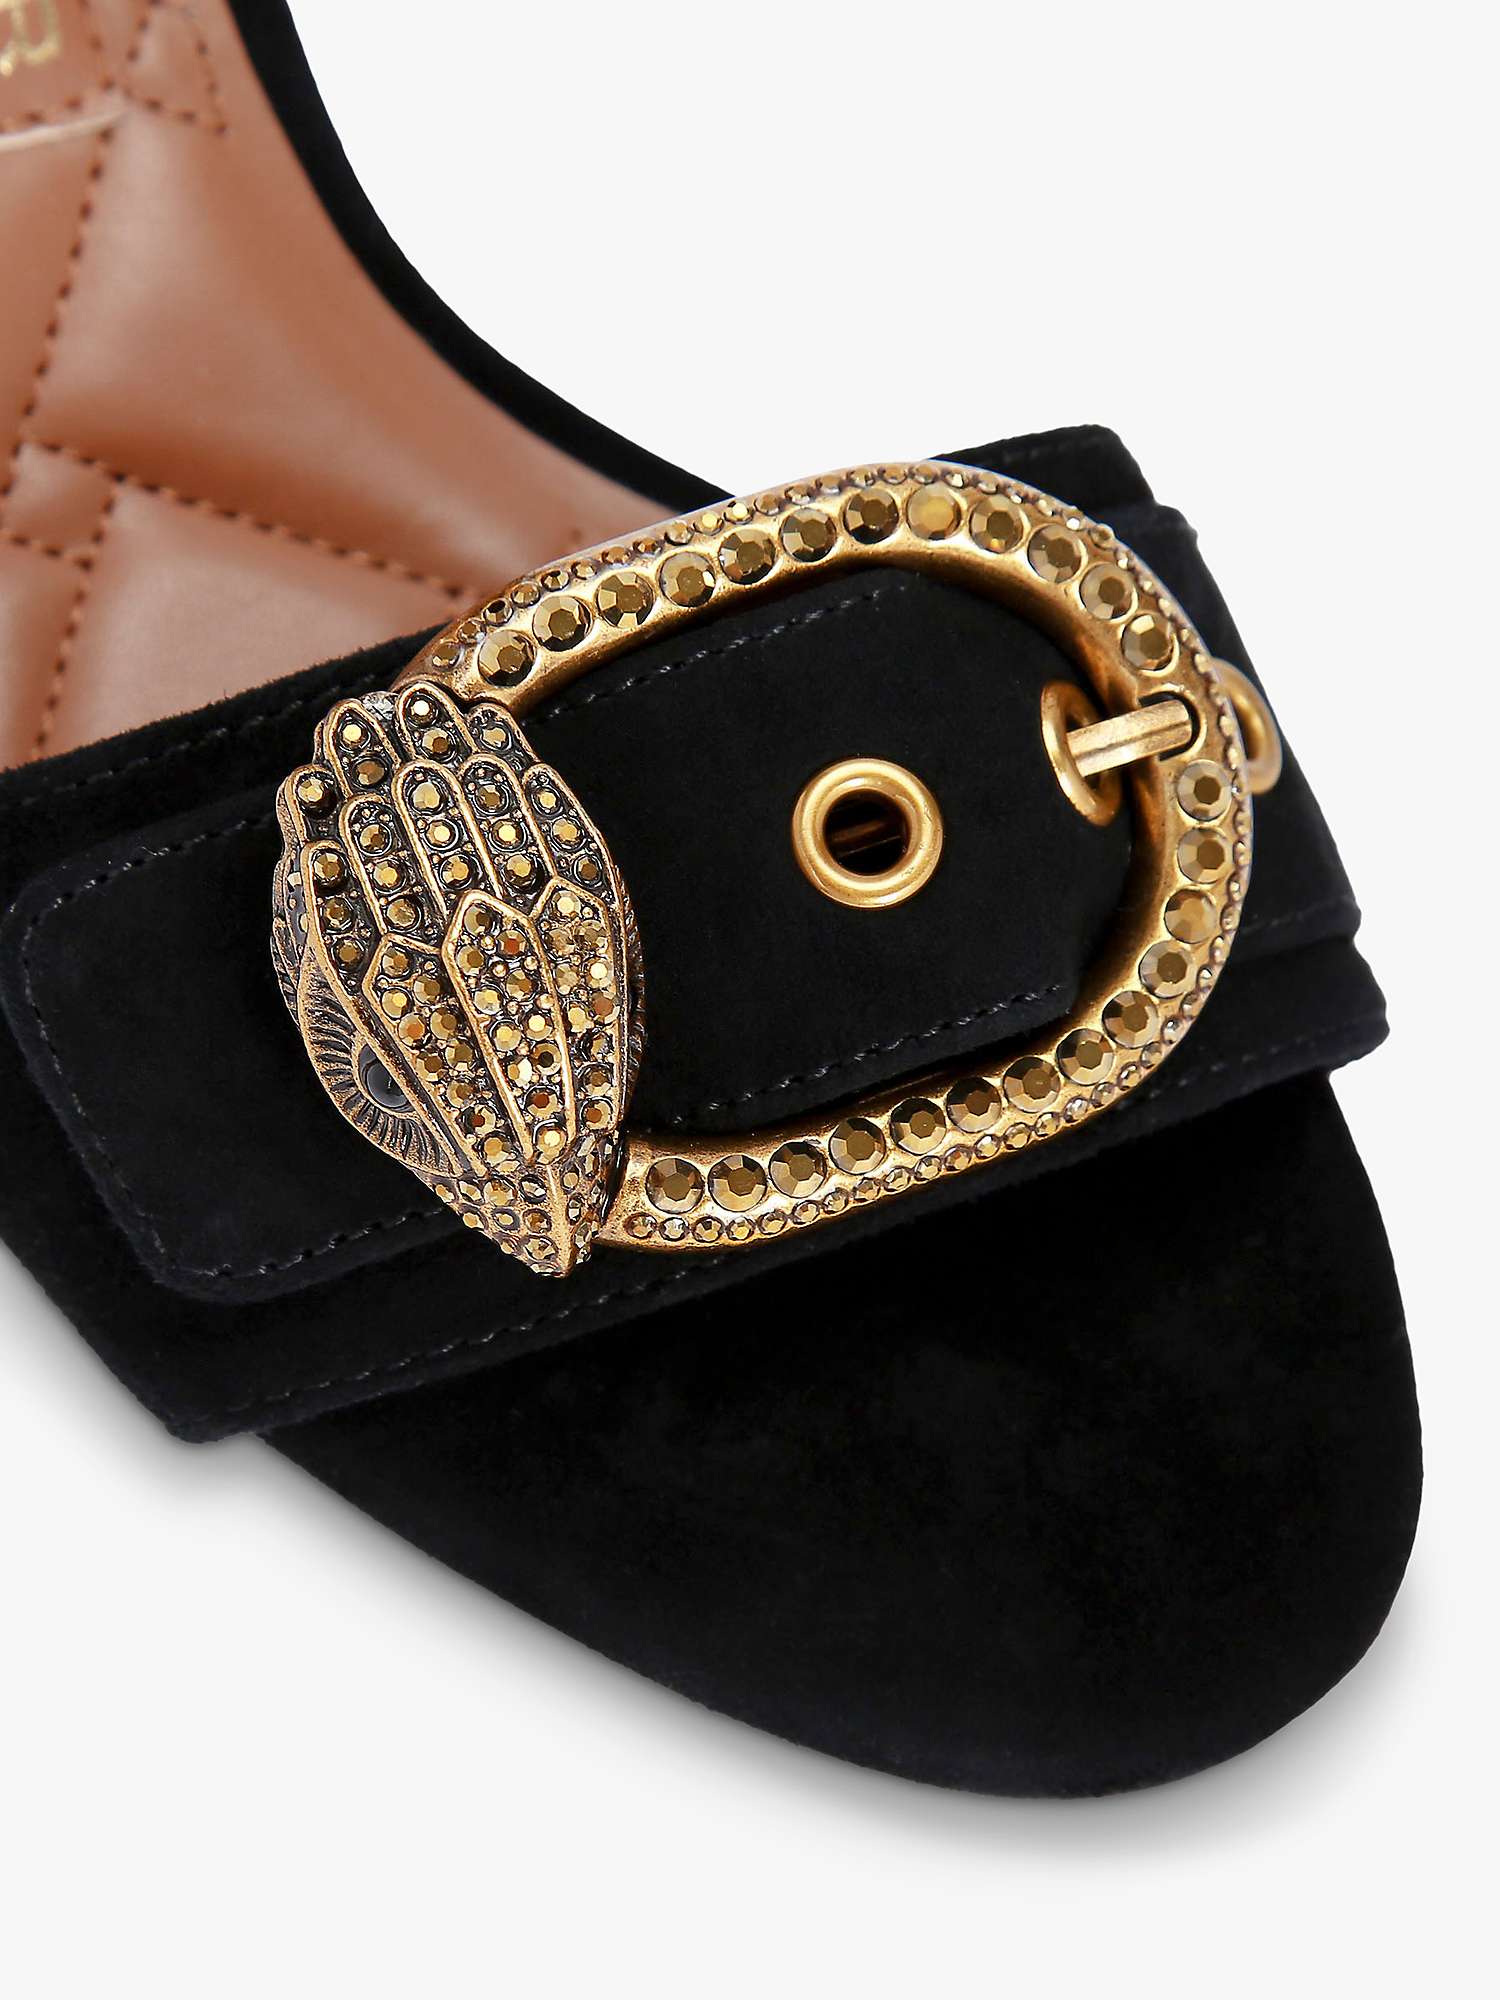 Buy Kurt Geiger London Mayfair Embellished Block Heel Suede Sandals, Black Online at johnlewis.com